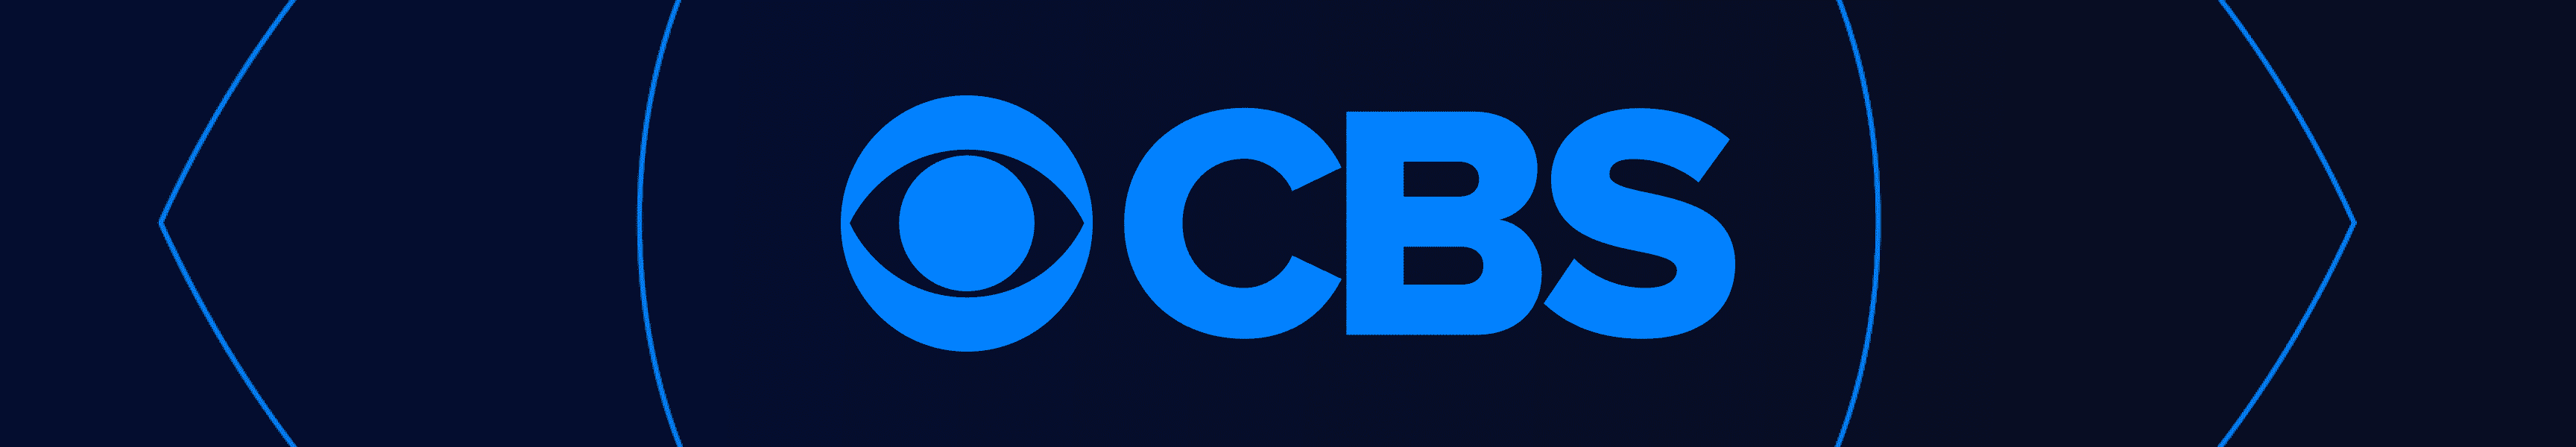 CBS Entertainment Logotipo